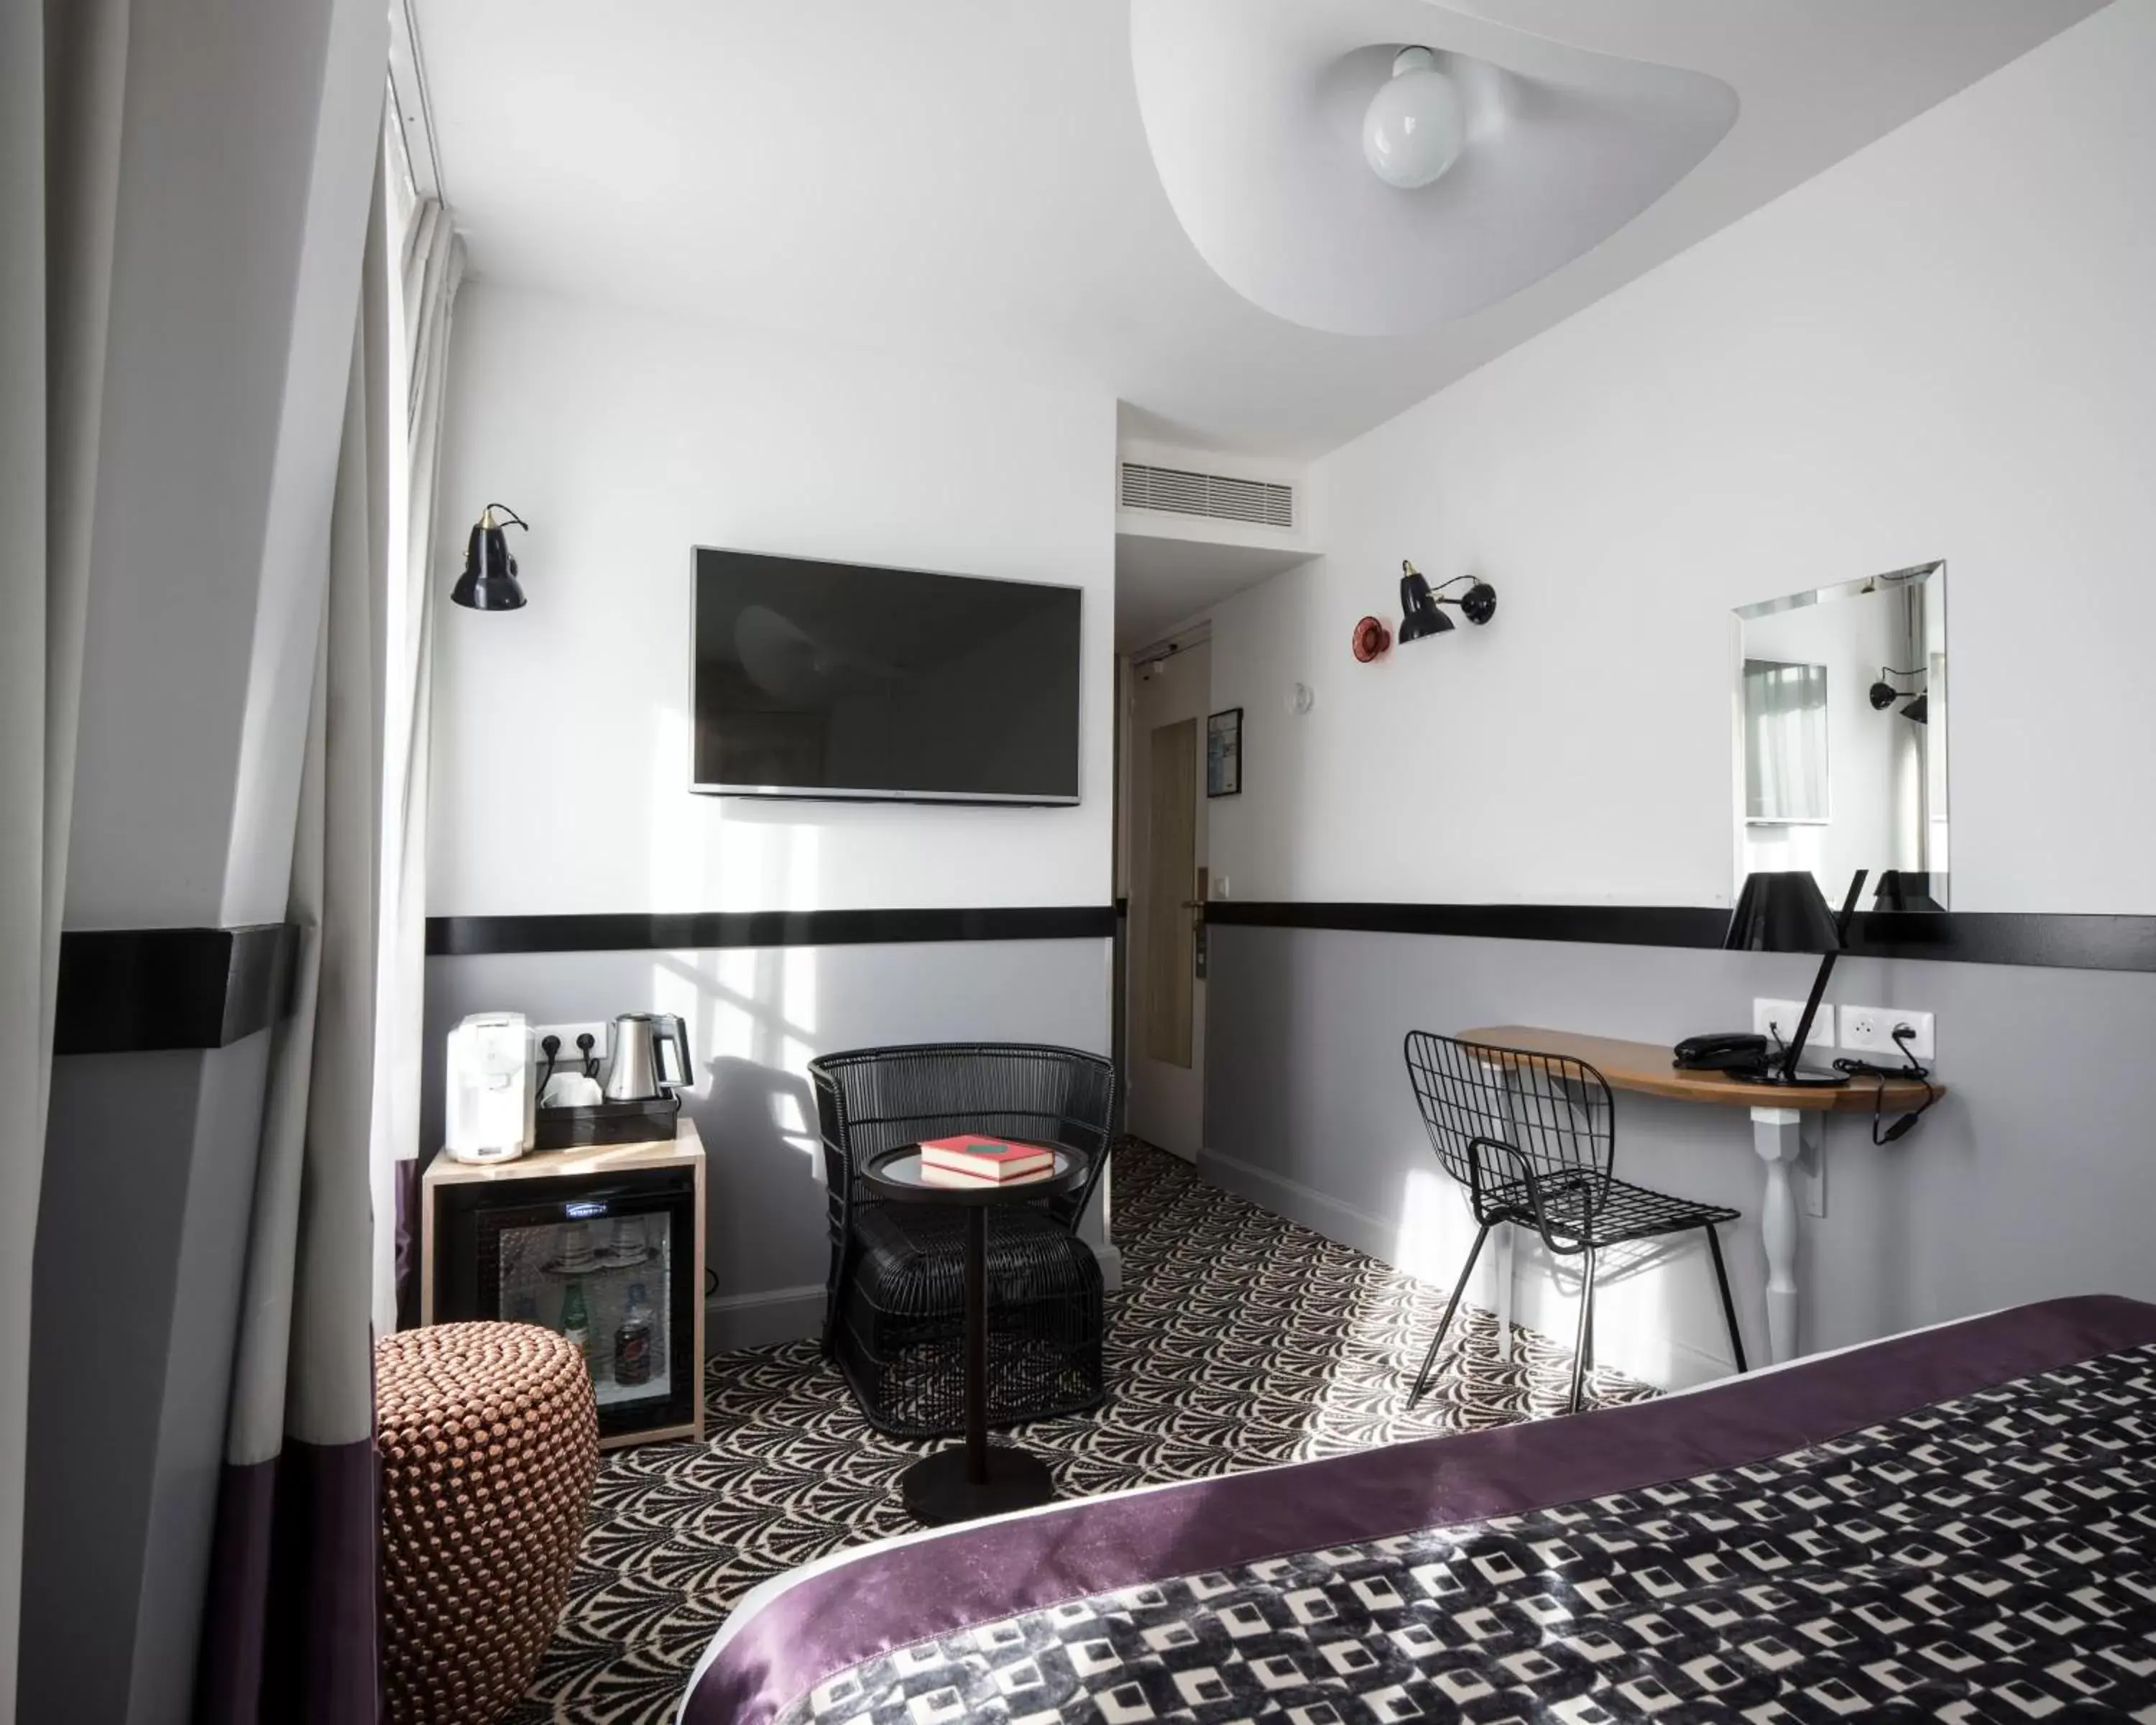 Bedroom in Hotel Malte - Astotel